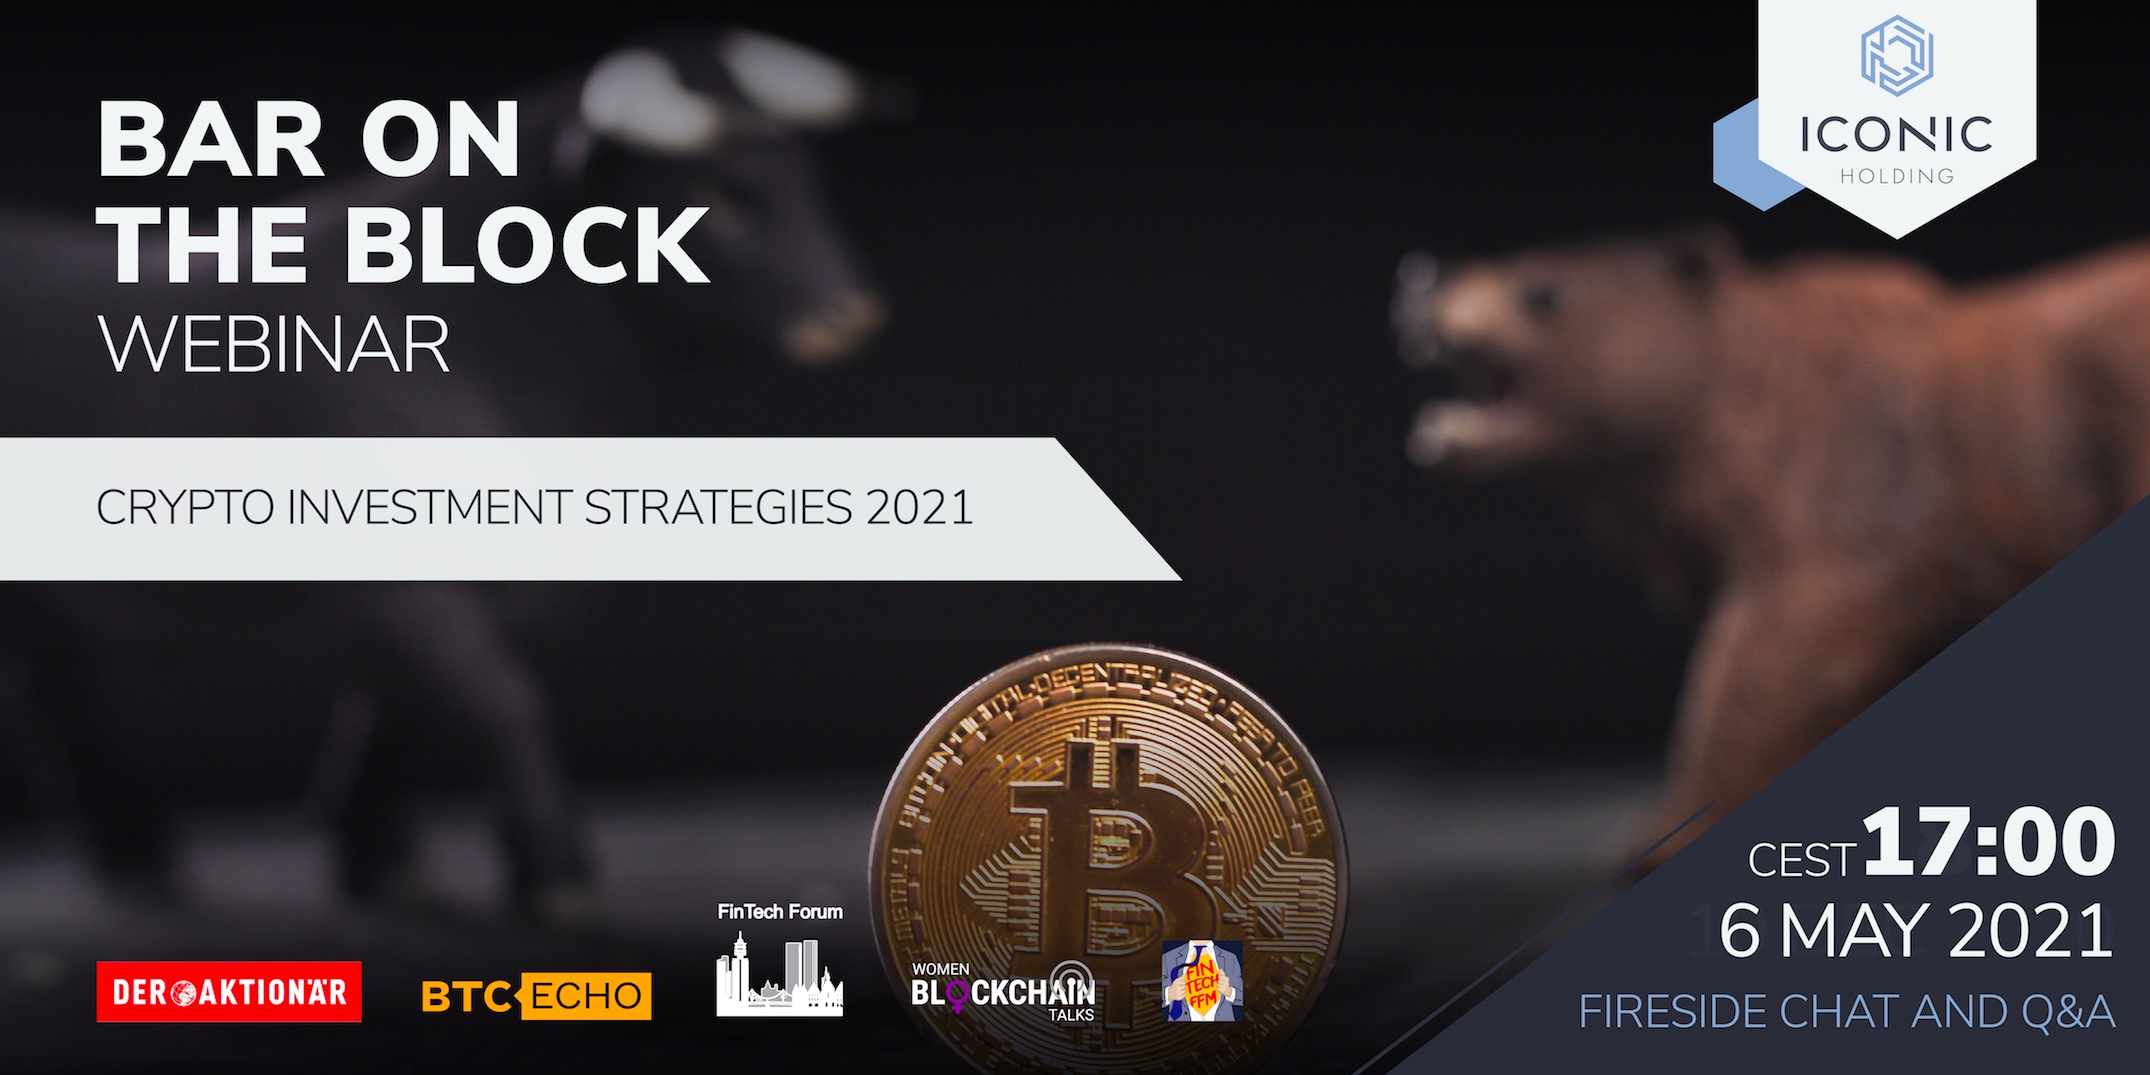 Crypto Investment Strategies 2021 event - WeAreTechWomen - Supporting